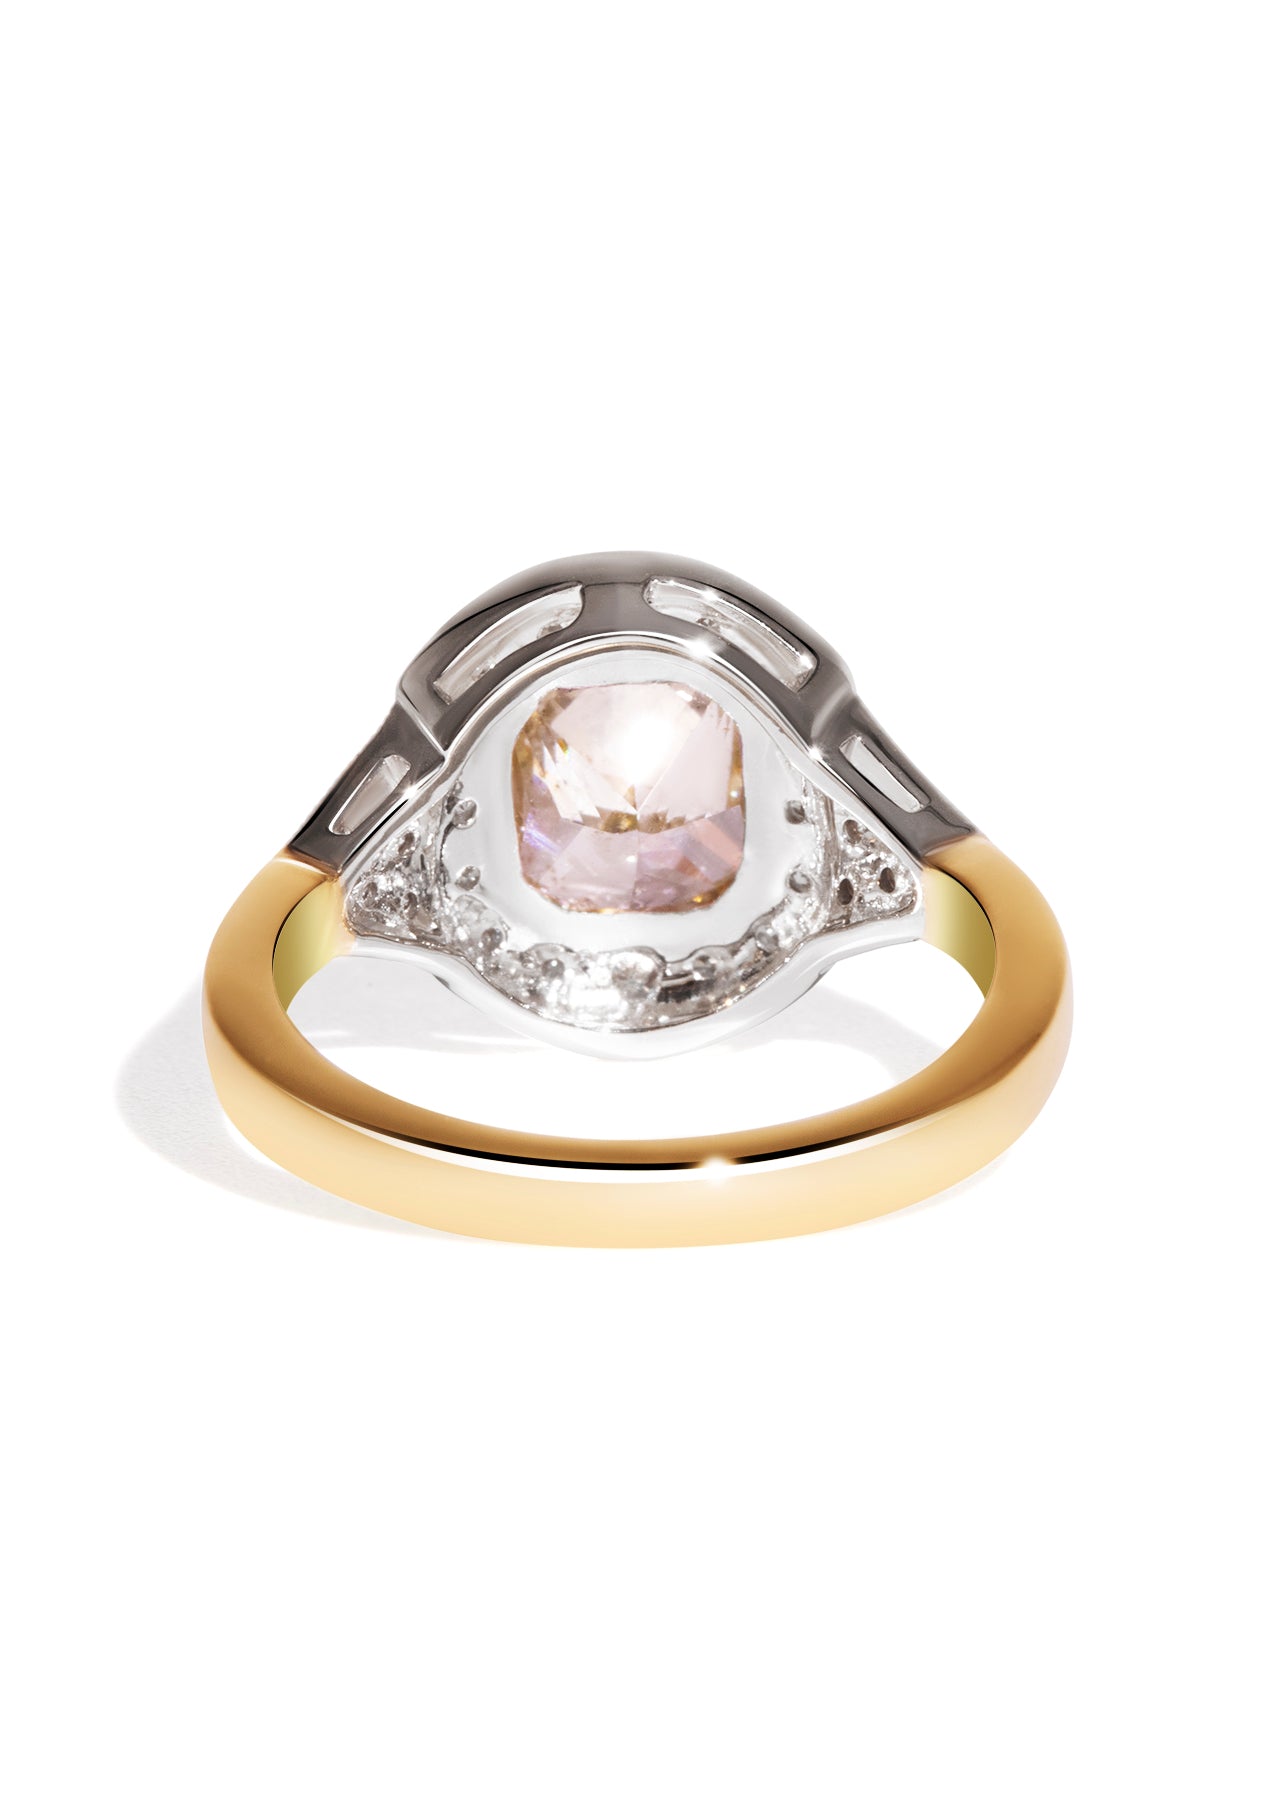 The Ebony Ring with 2.13ct Radiant Yellow Diamond